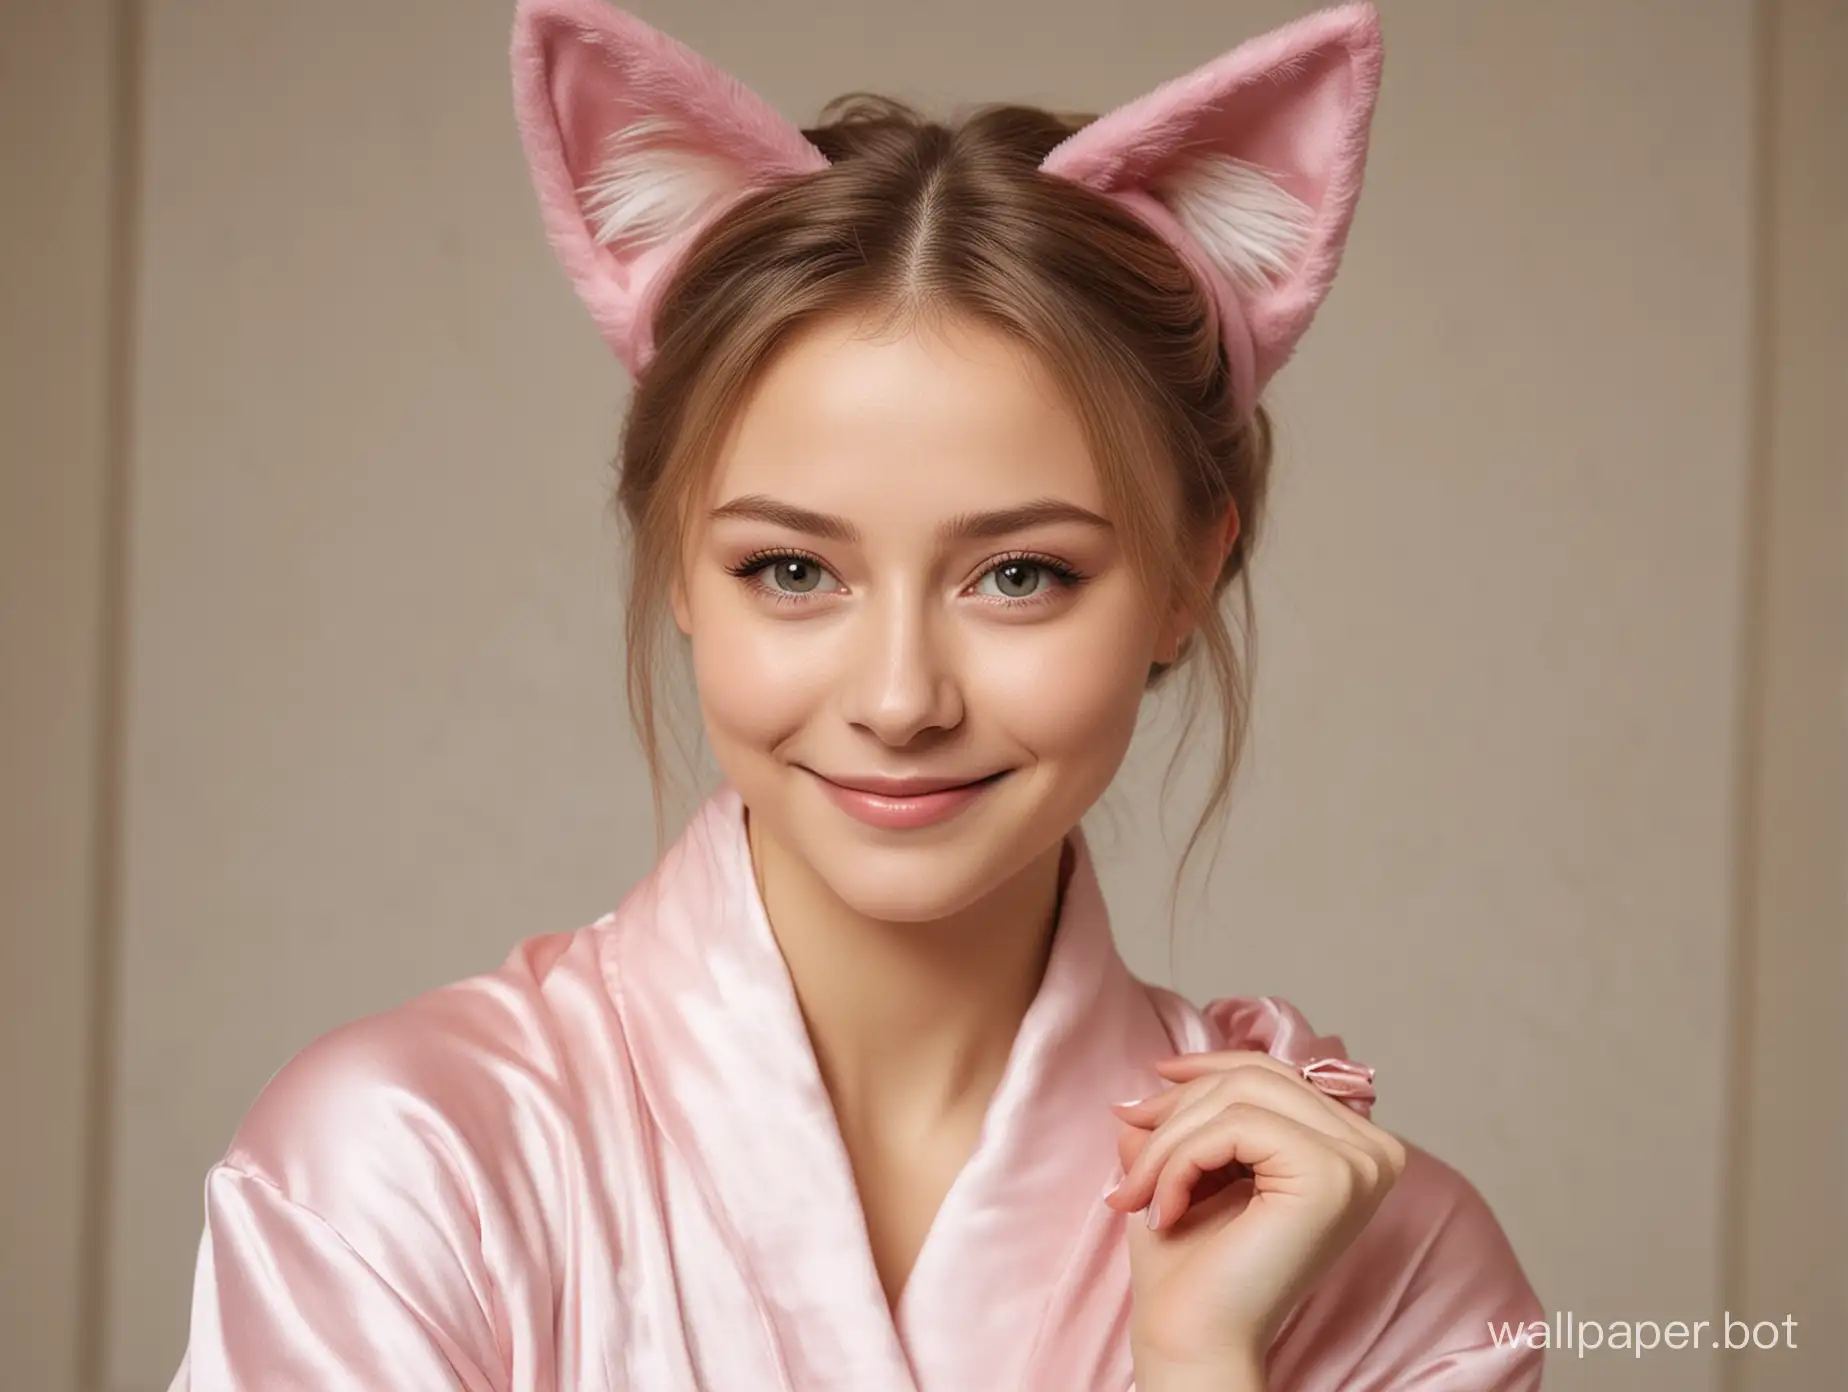 Yulia Lipnitskaya in a silk robe with cat ears smiles